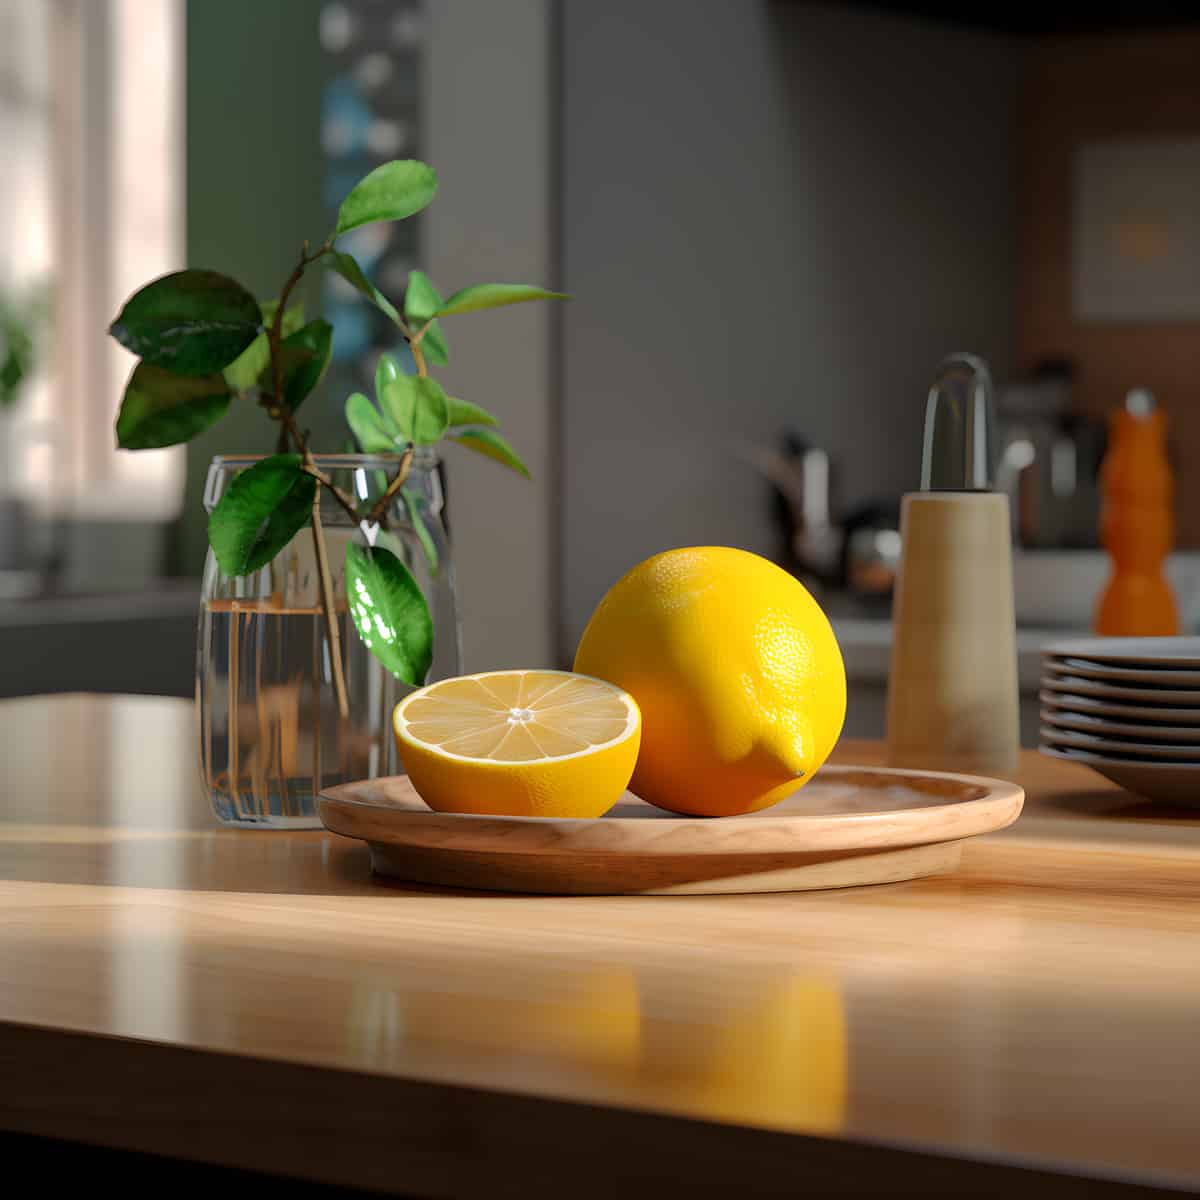 Citron Melon on a kitchen counter